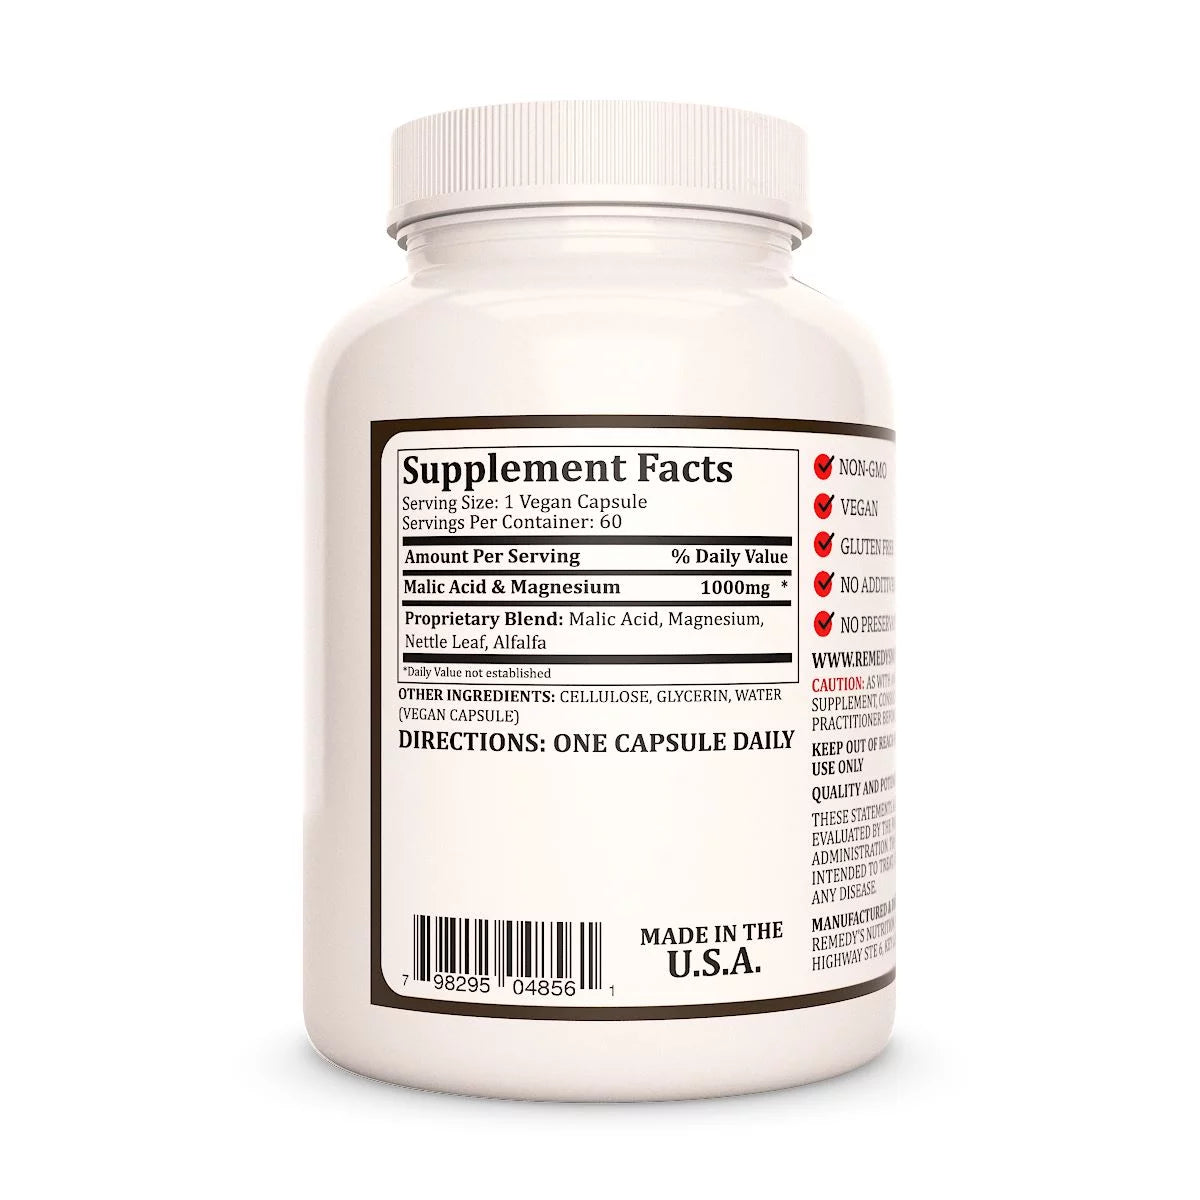 Image of Remedy's Nutrition® Malic Acid & Magnesium back bottle label. Supplement Facts, Ingredients Nettle Leaf, Alfalfa.